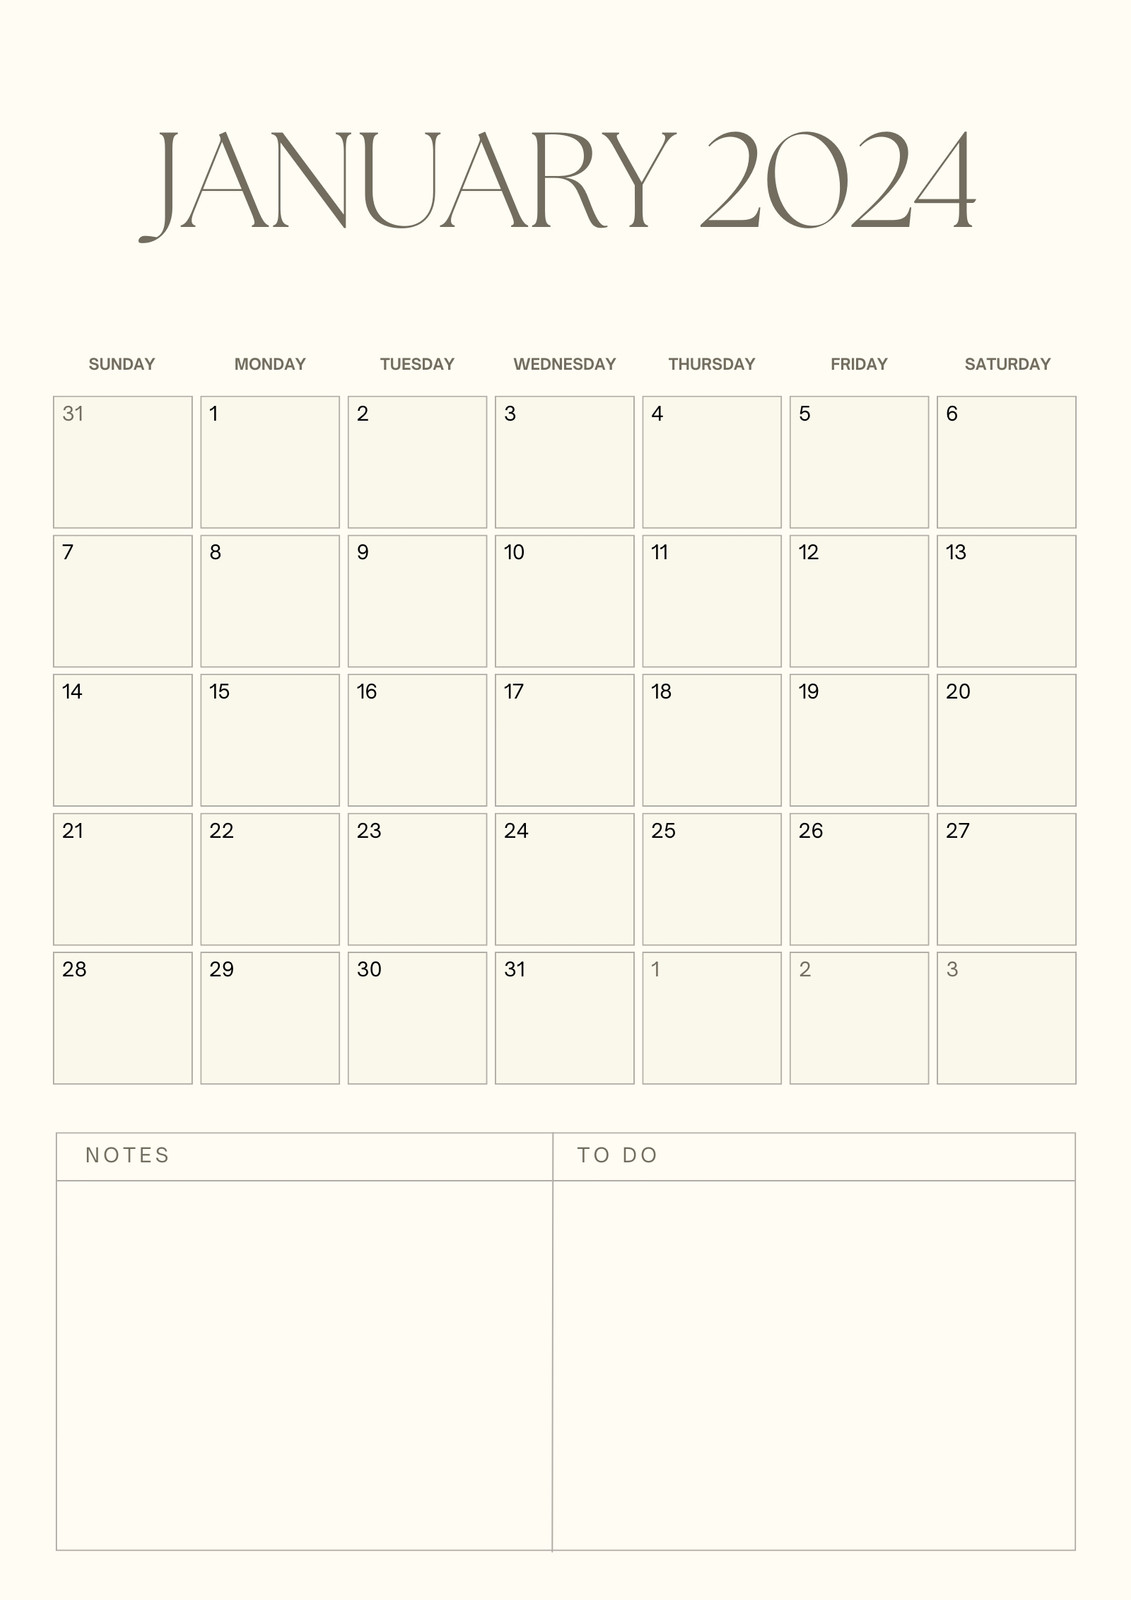 https://marketplace.canva.com/EAFtyAiZwjE/1/0/1131w/canva-simple-and-minimal-monthly-printable-planner-2024-calendar-Kpr9EhZByUI.jpg